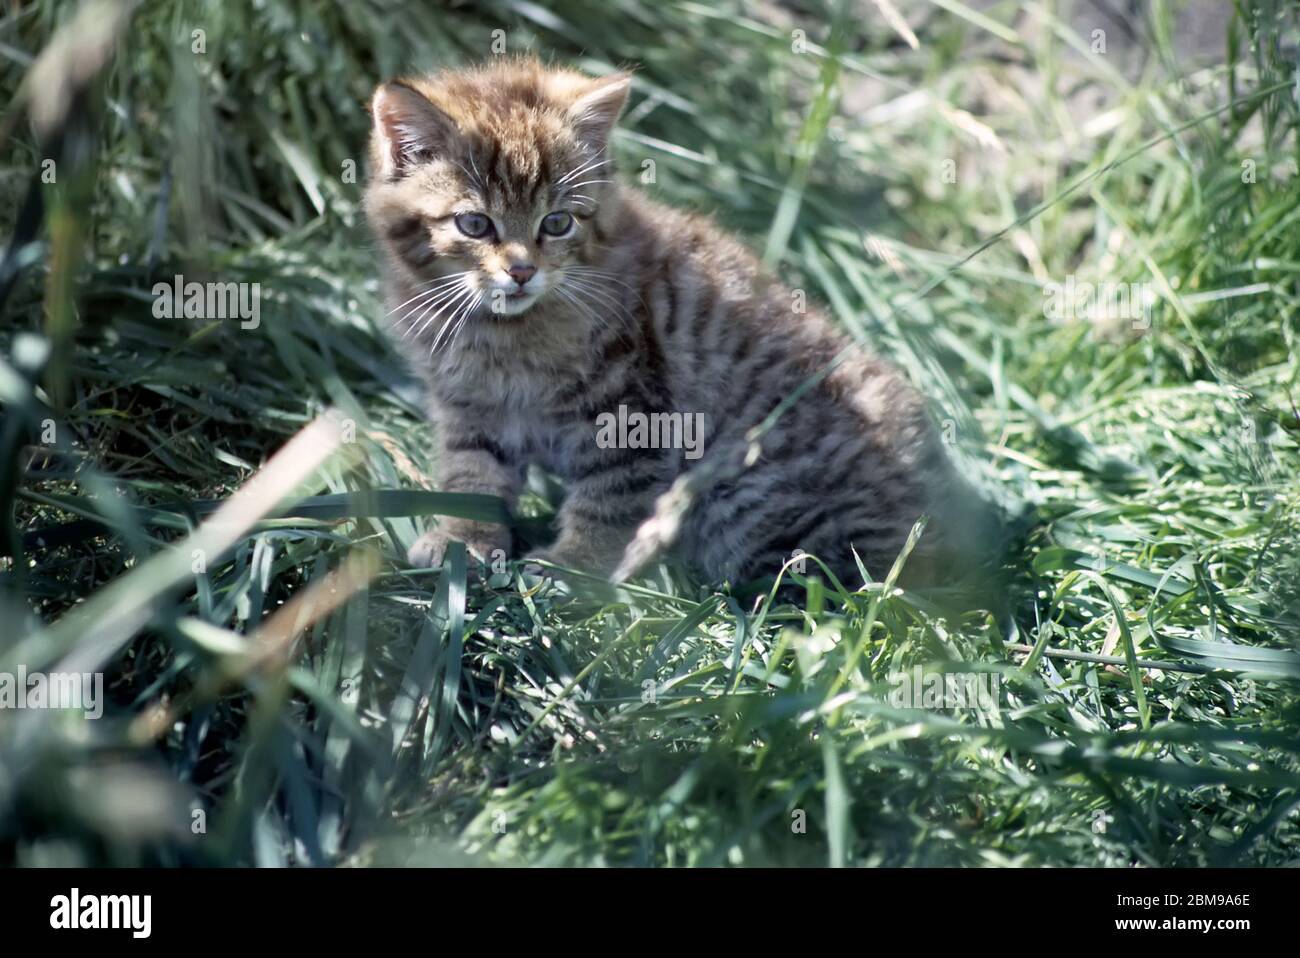 Scottish wildcat kitten Stock Photo